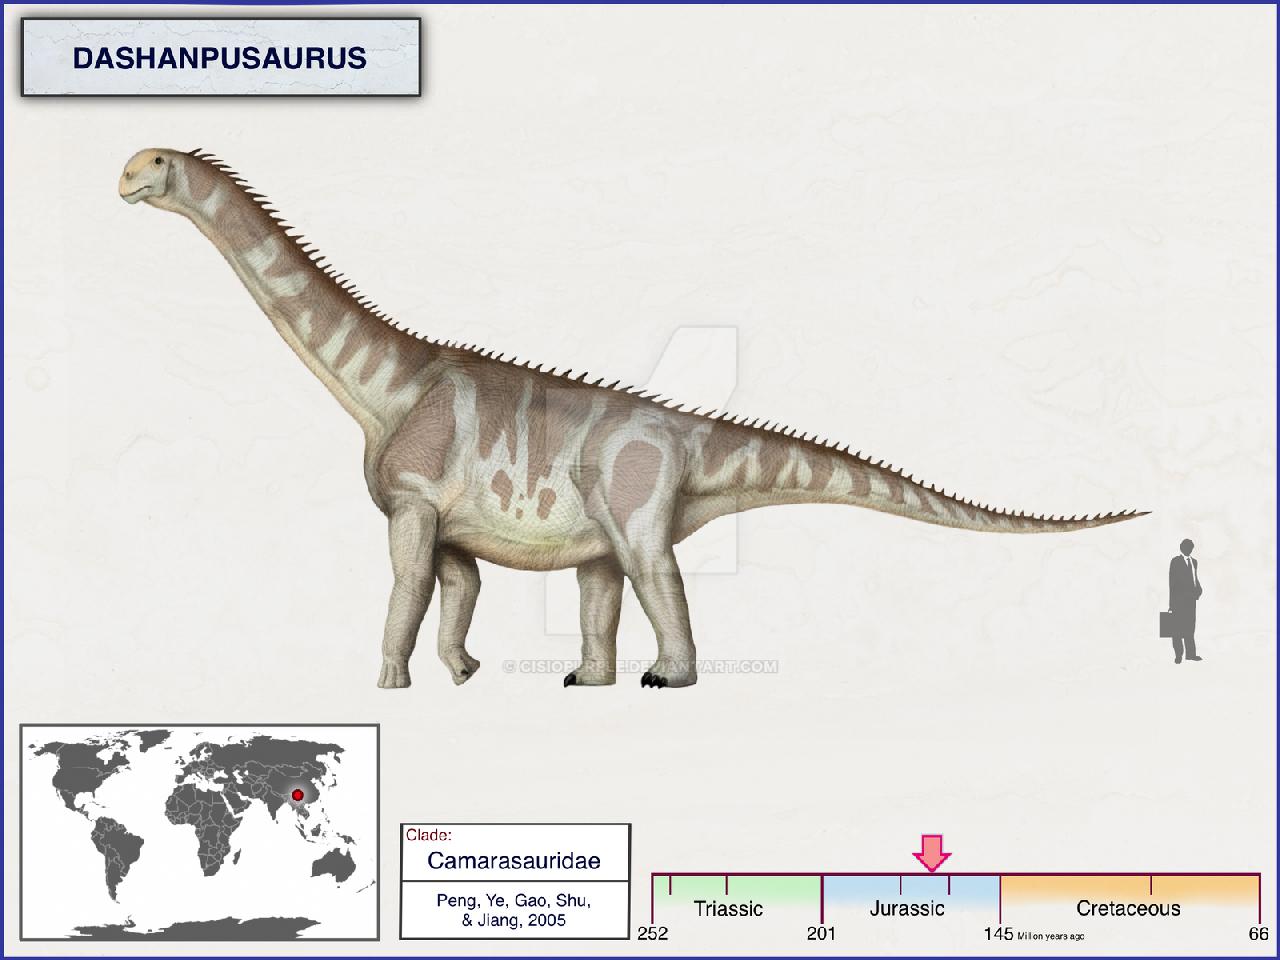 Dashanpusaurus, Jurassic
(Юрский период)